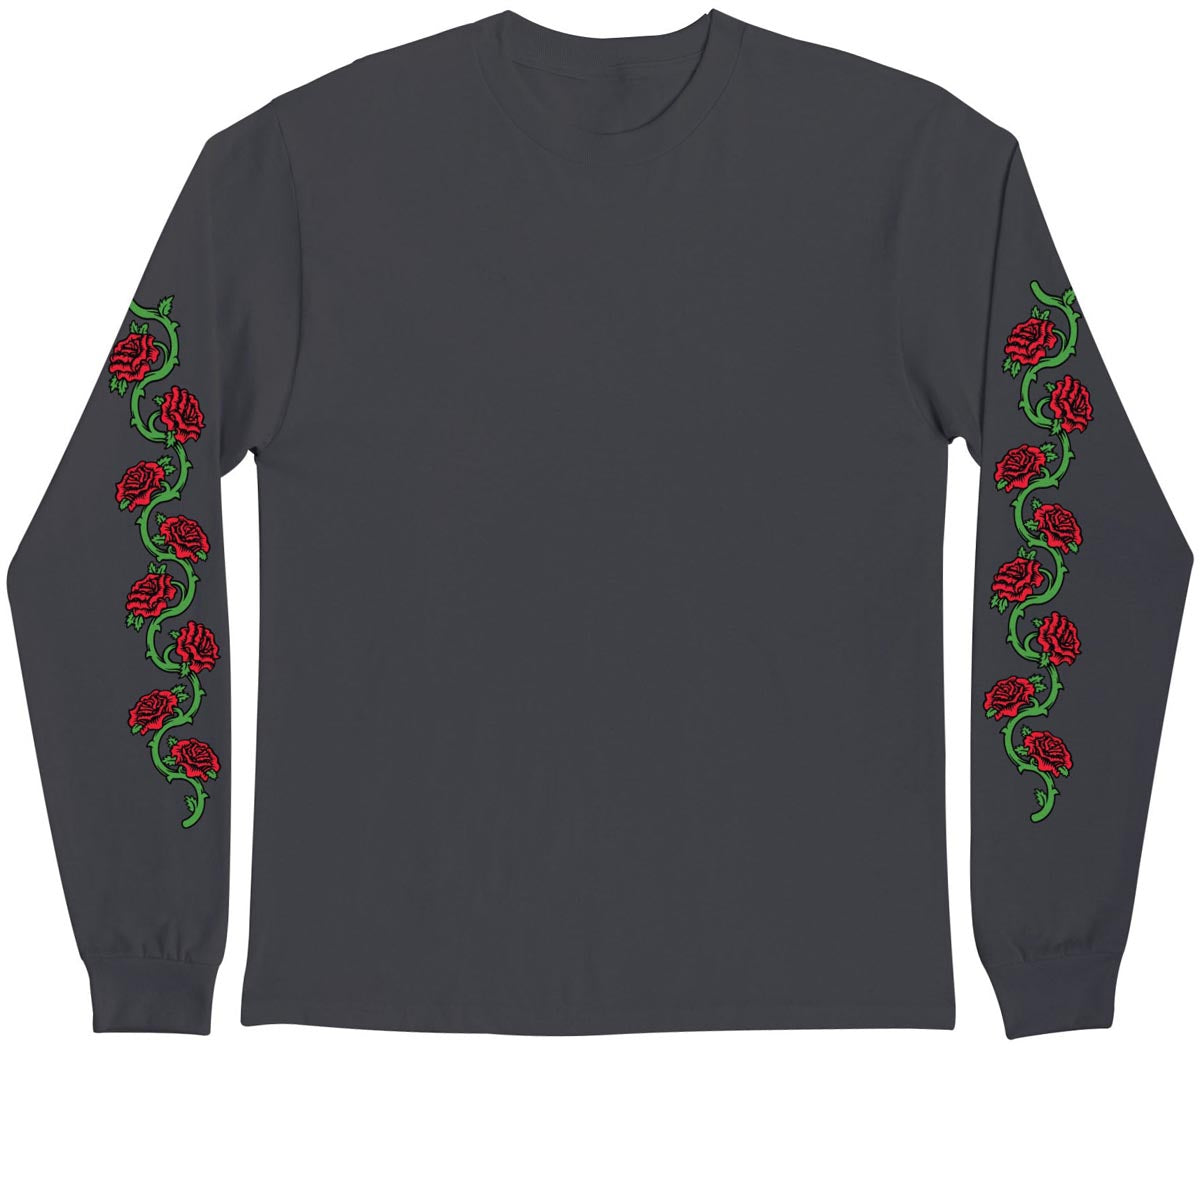 Santa Cruz Dressen Mash Up Long Sleeve T-Shirt - Charcoal image 2